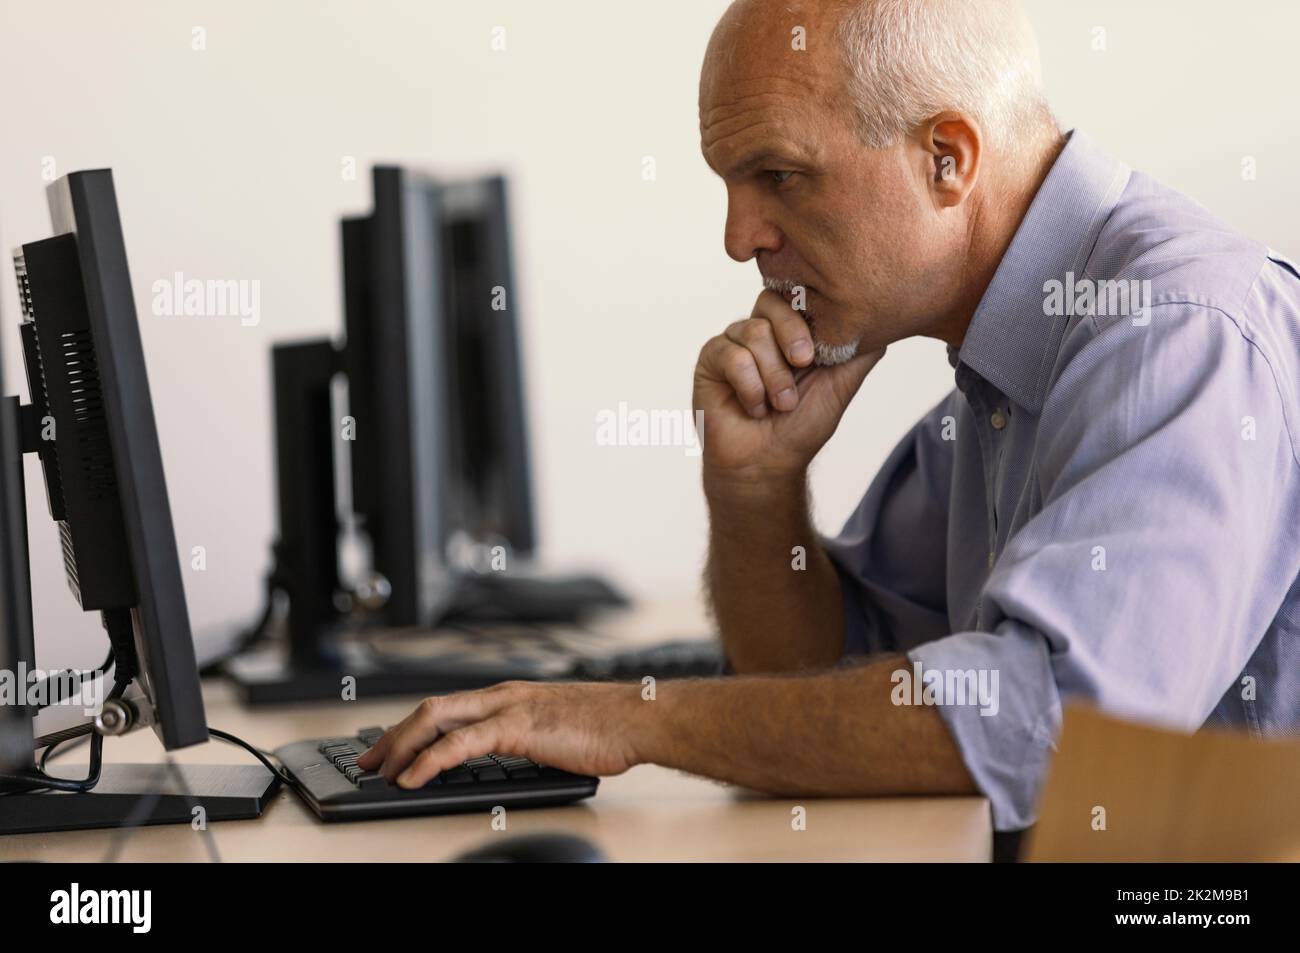 Profile view of senior man working at computer. Stock Photo